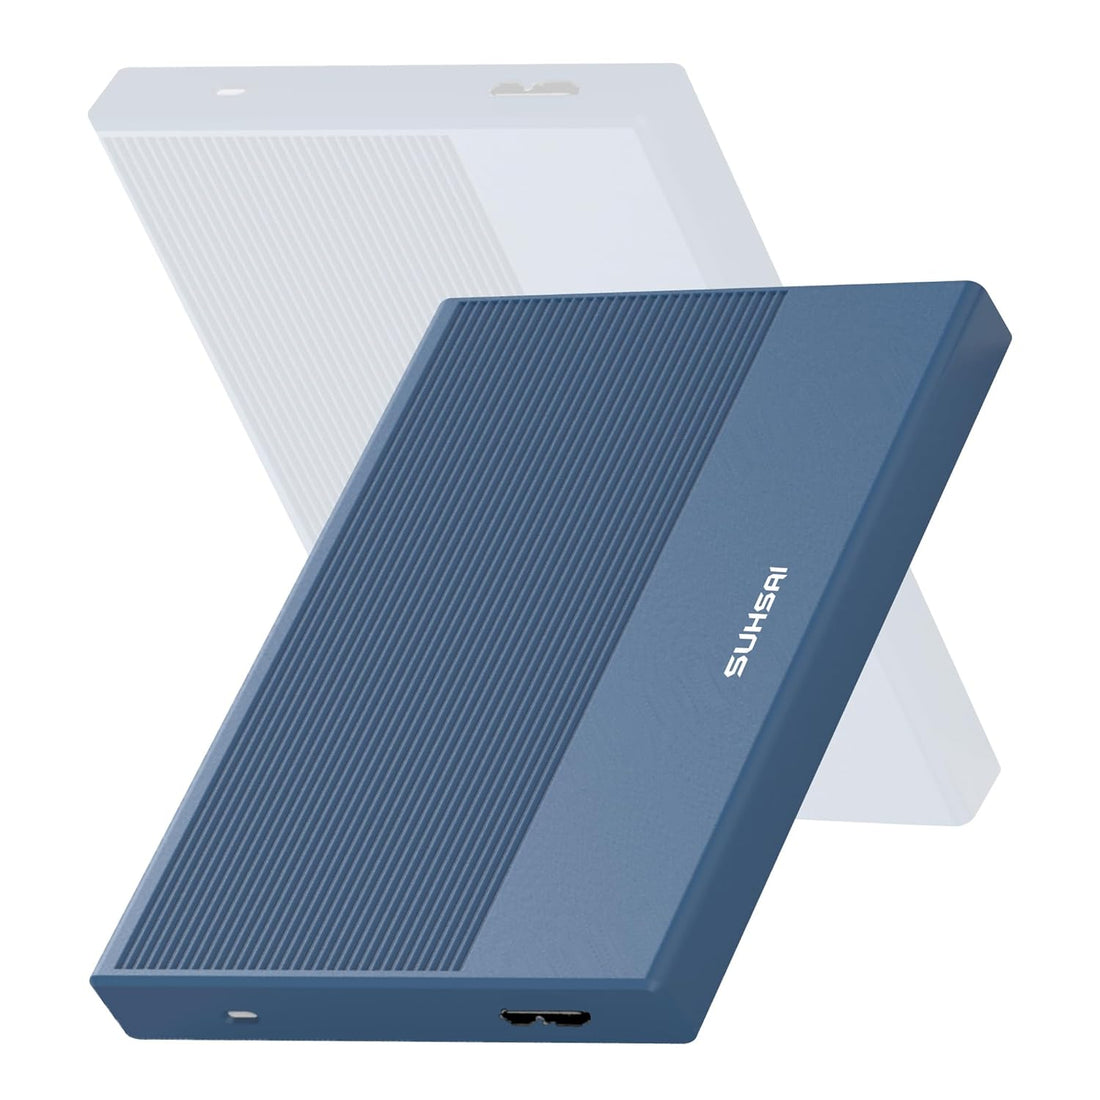 SUHSAI External Hard Drive 500GB USB 3.0 Portable Hard Disk Storage & Memory Expansion HDD, Backup External Hard Drive for Laptop Computer, MacBook, and Desktop (Navy Blue)